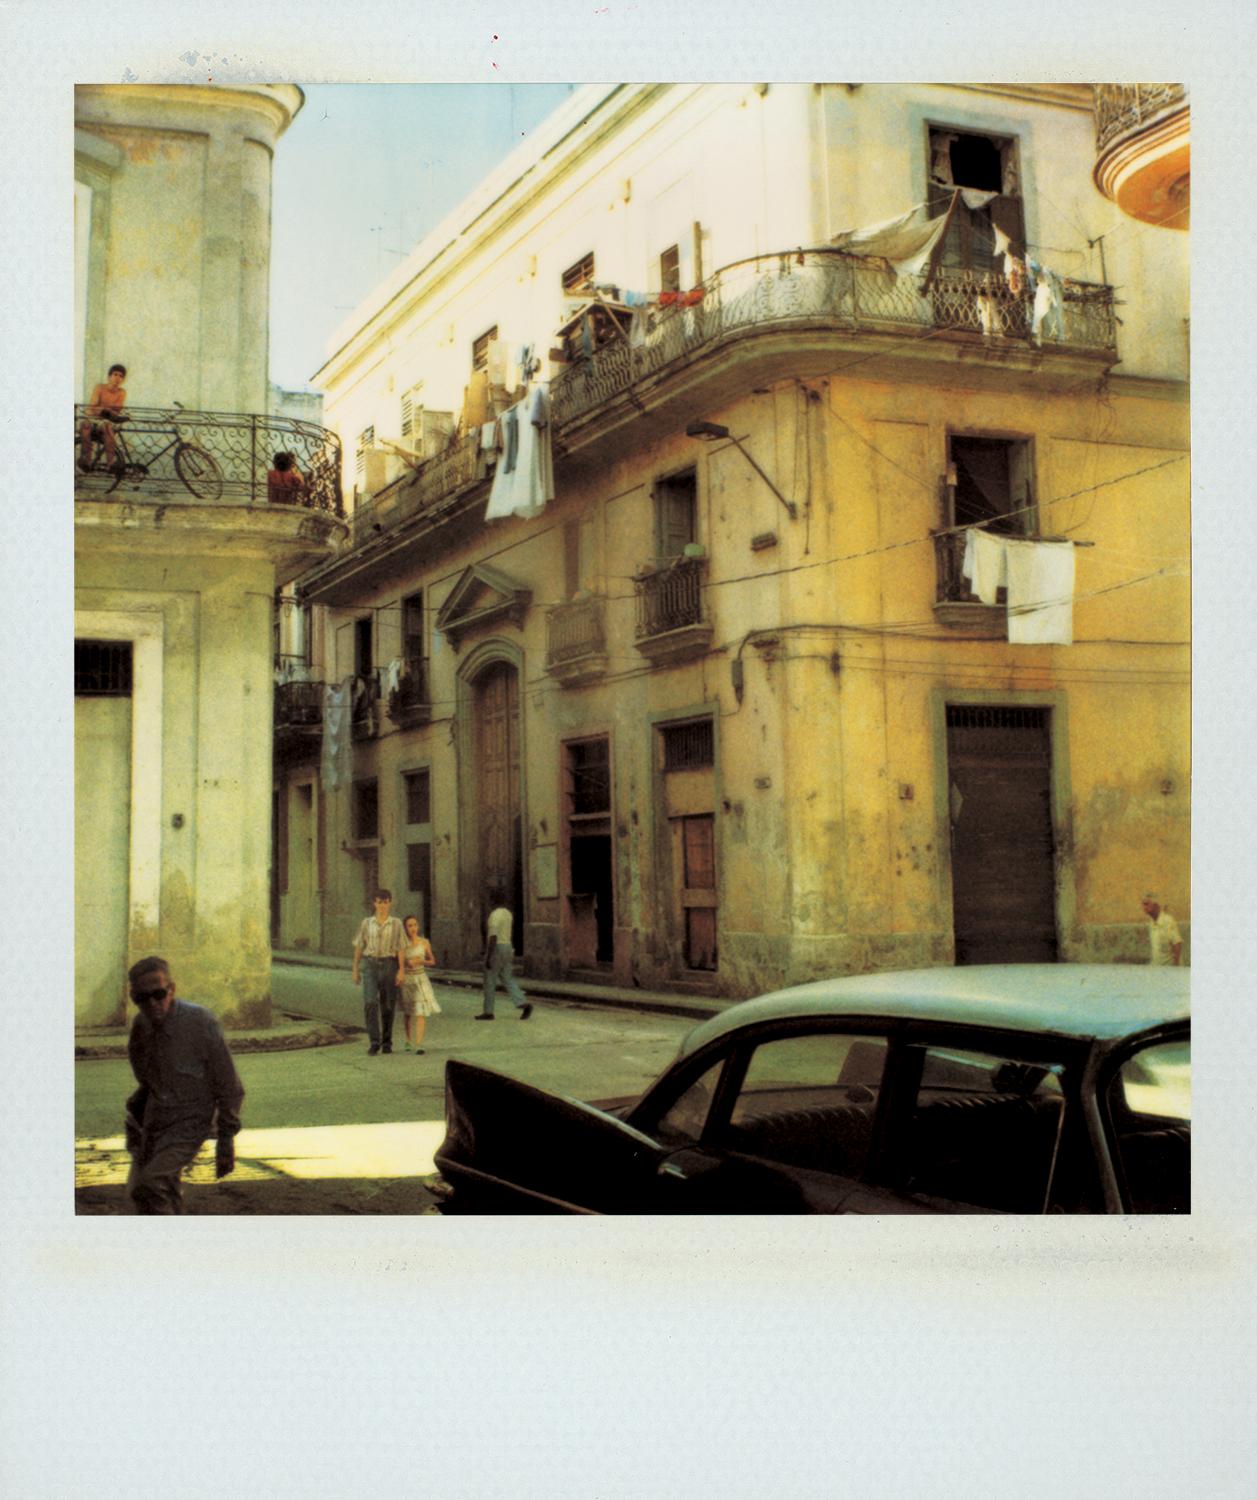 "From the Church La Merced", Cuba, 1994